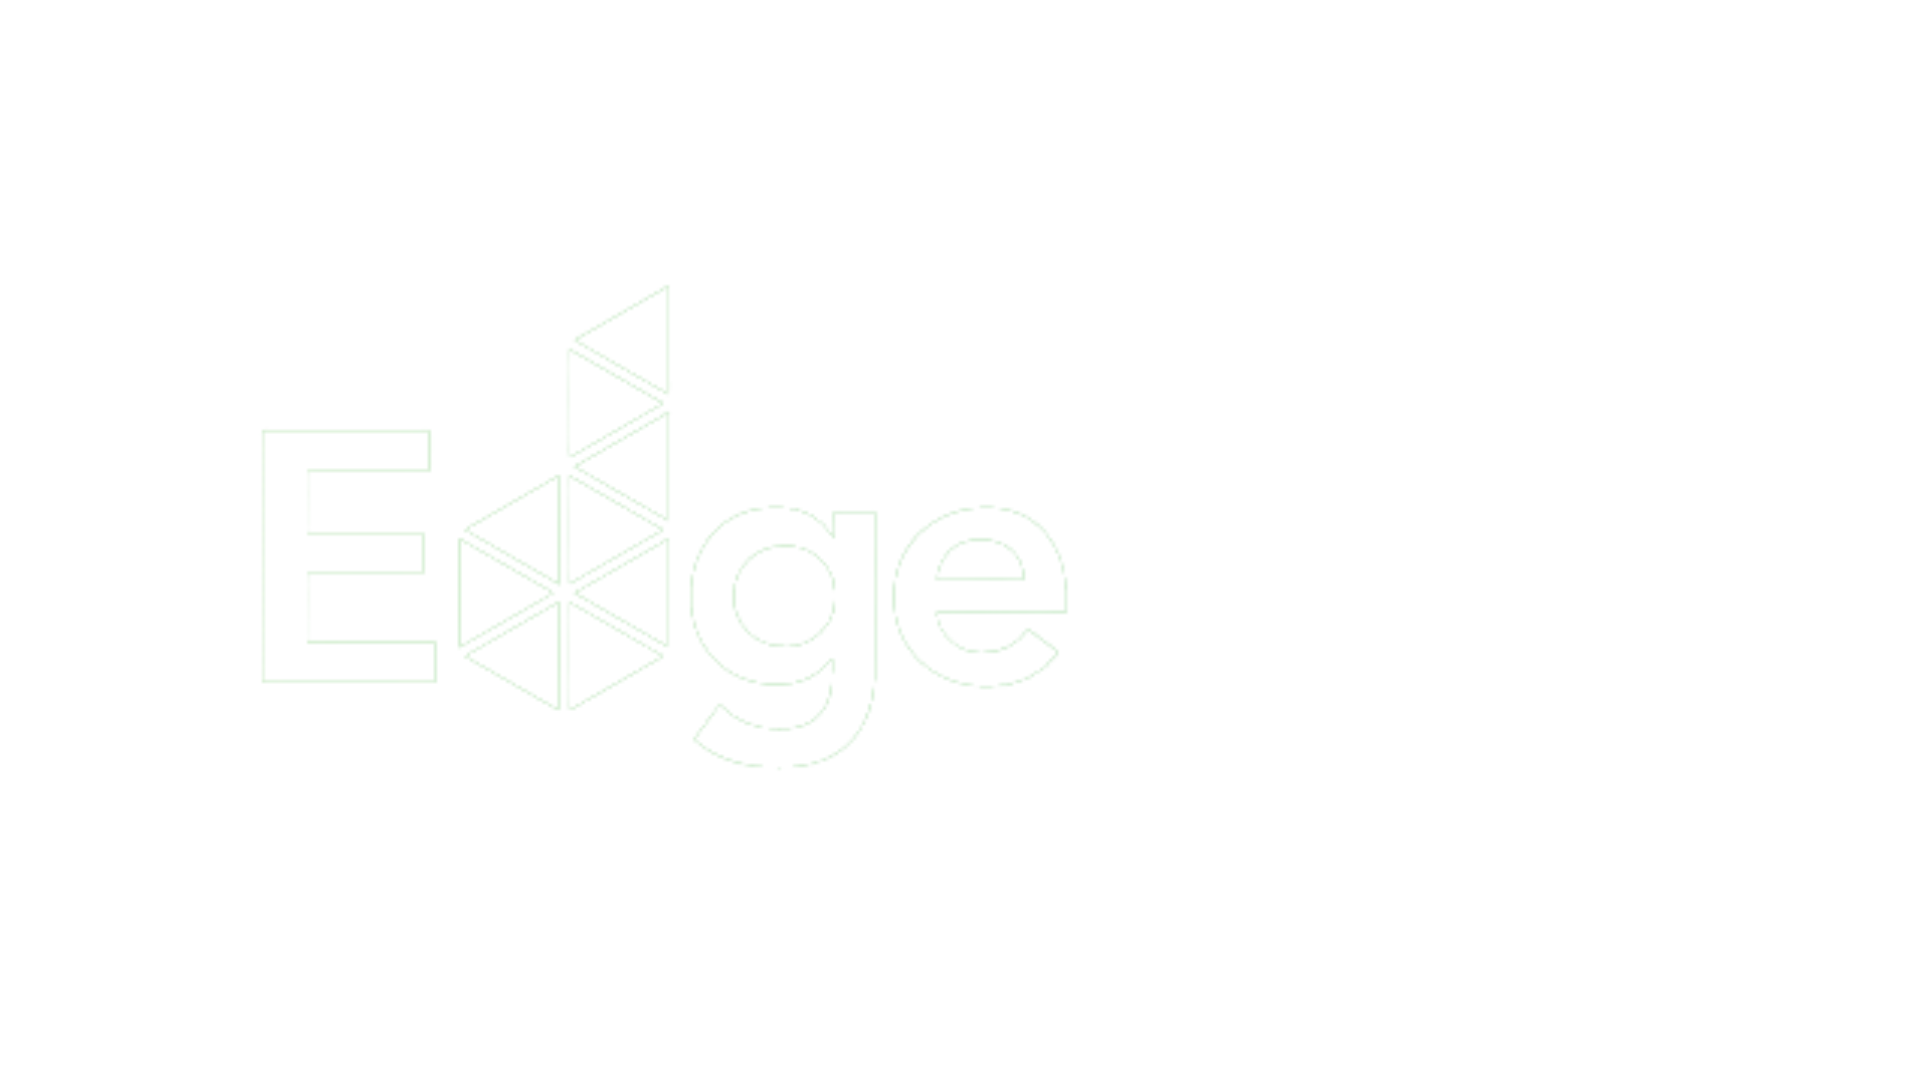 Edge En Bolivia